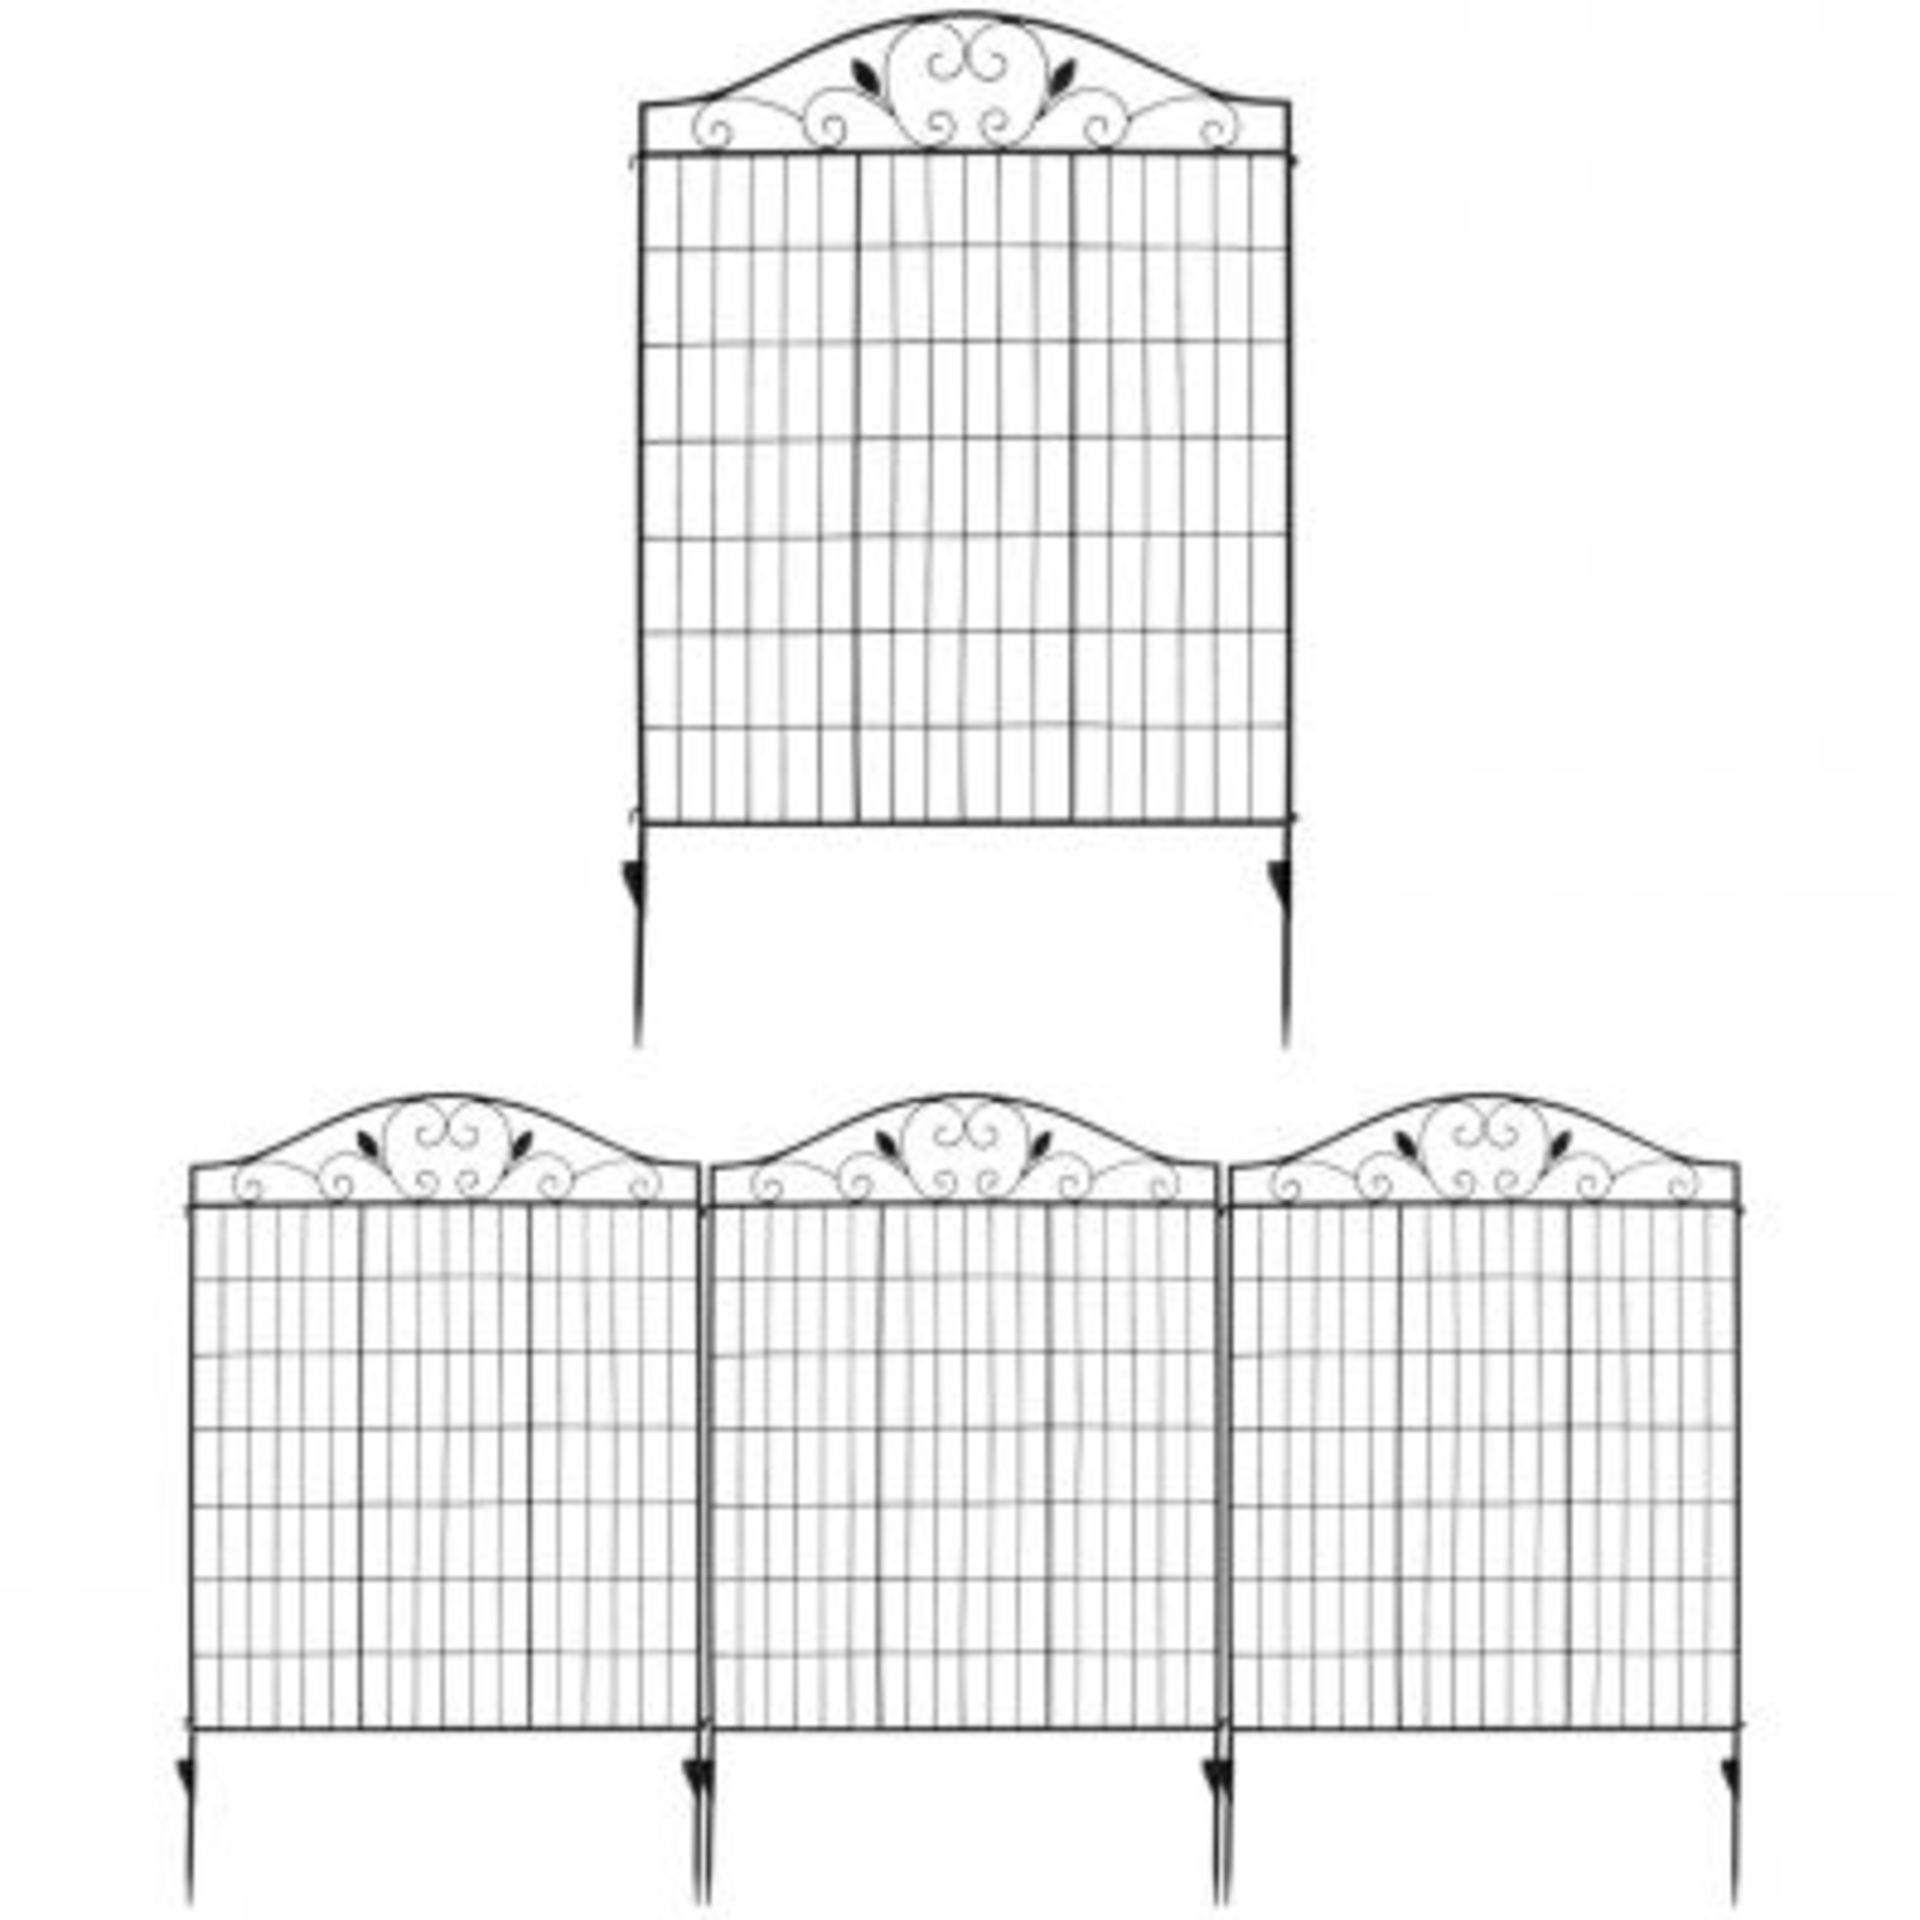 4 Panels Folding Iron Decorative Garden Fence Interlockable - ER54